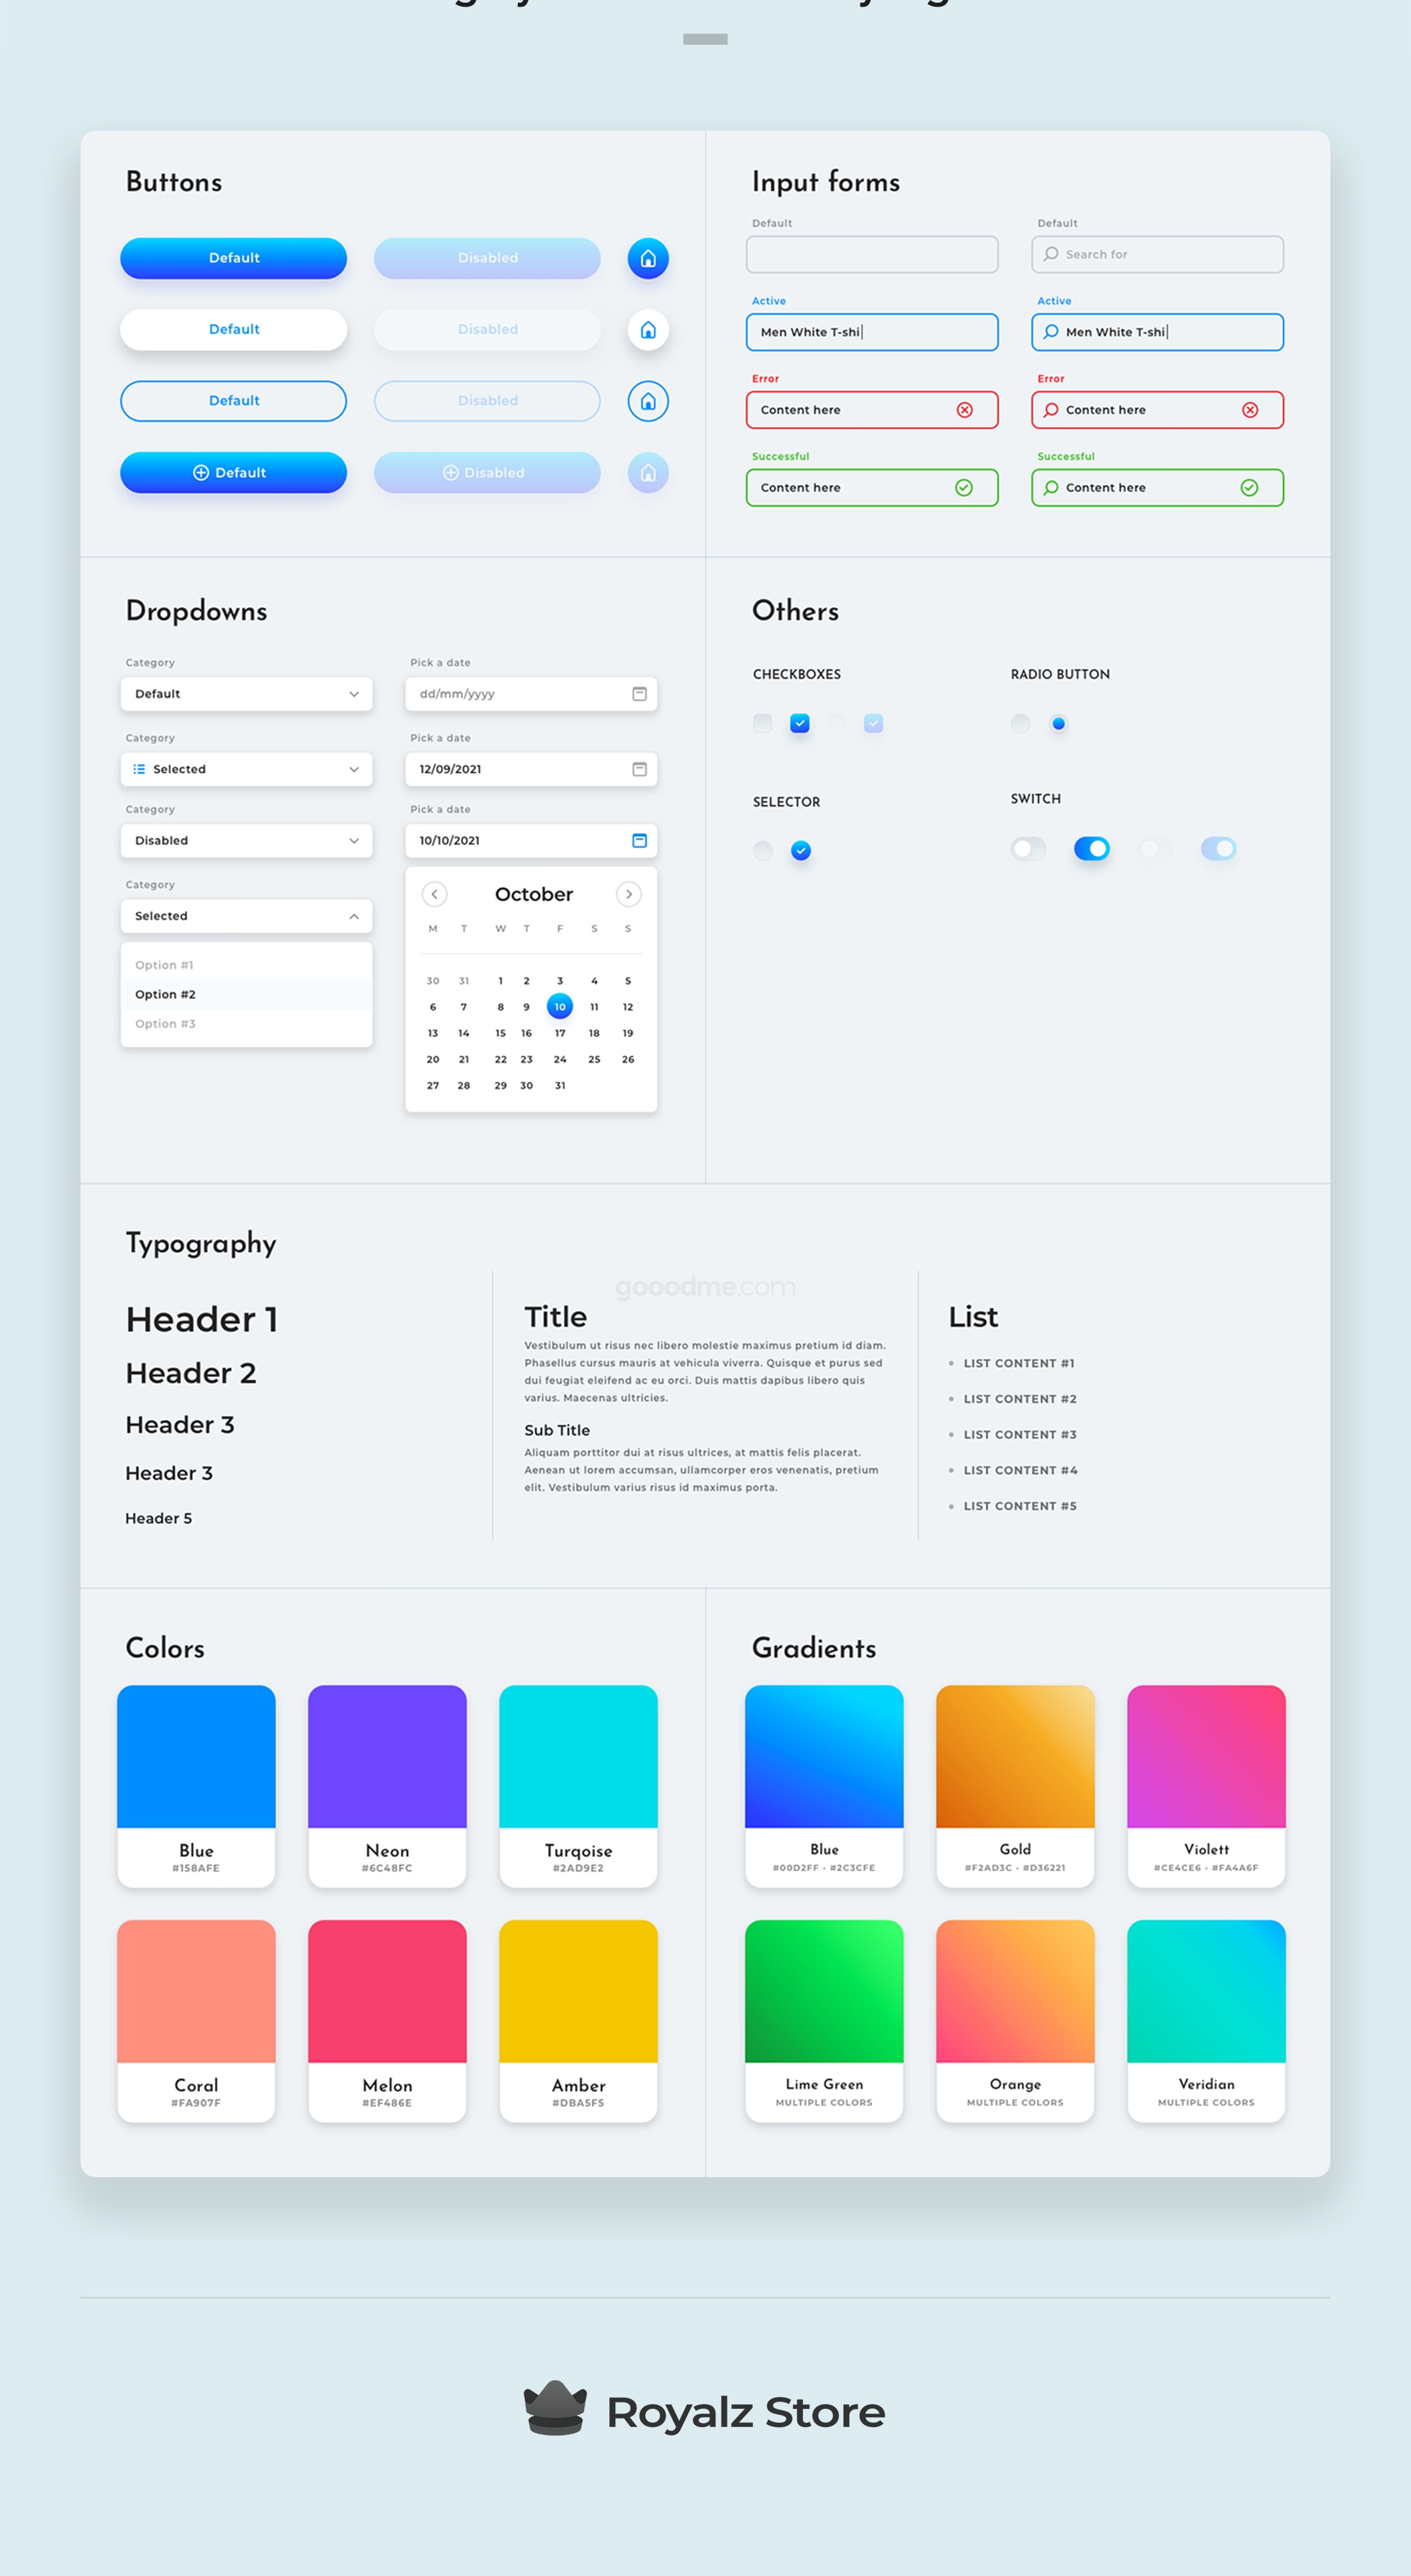 简洁后端数据统计界面网页&app UI设计模板Natasha Dashboard GUI Kit